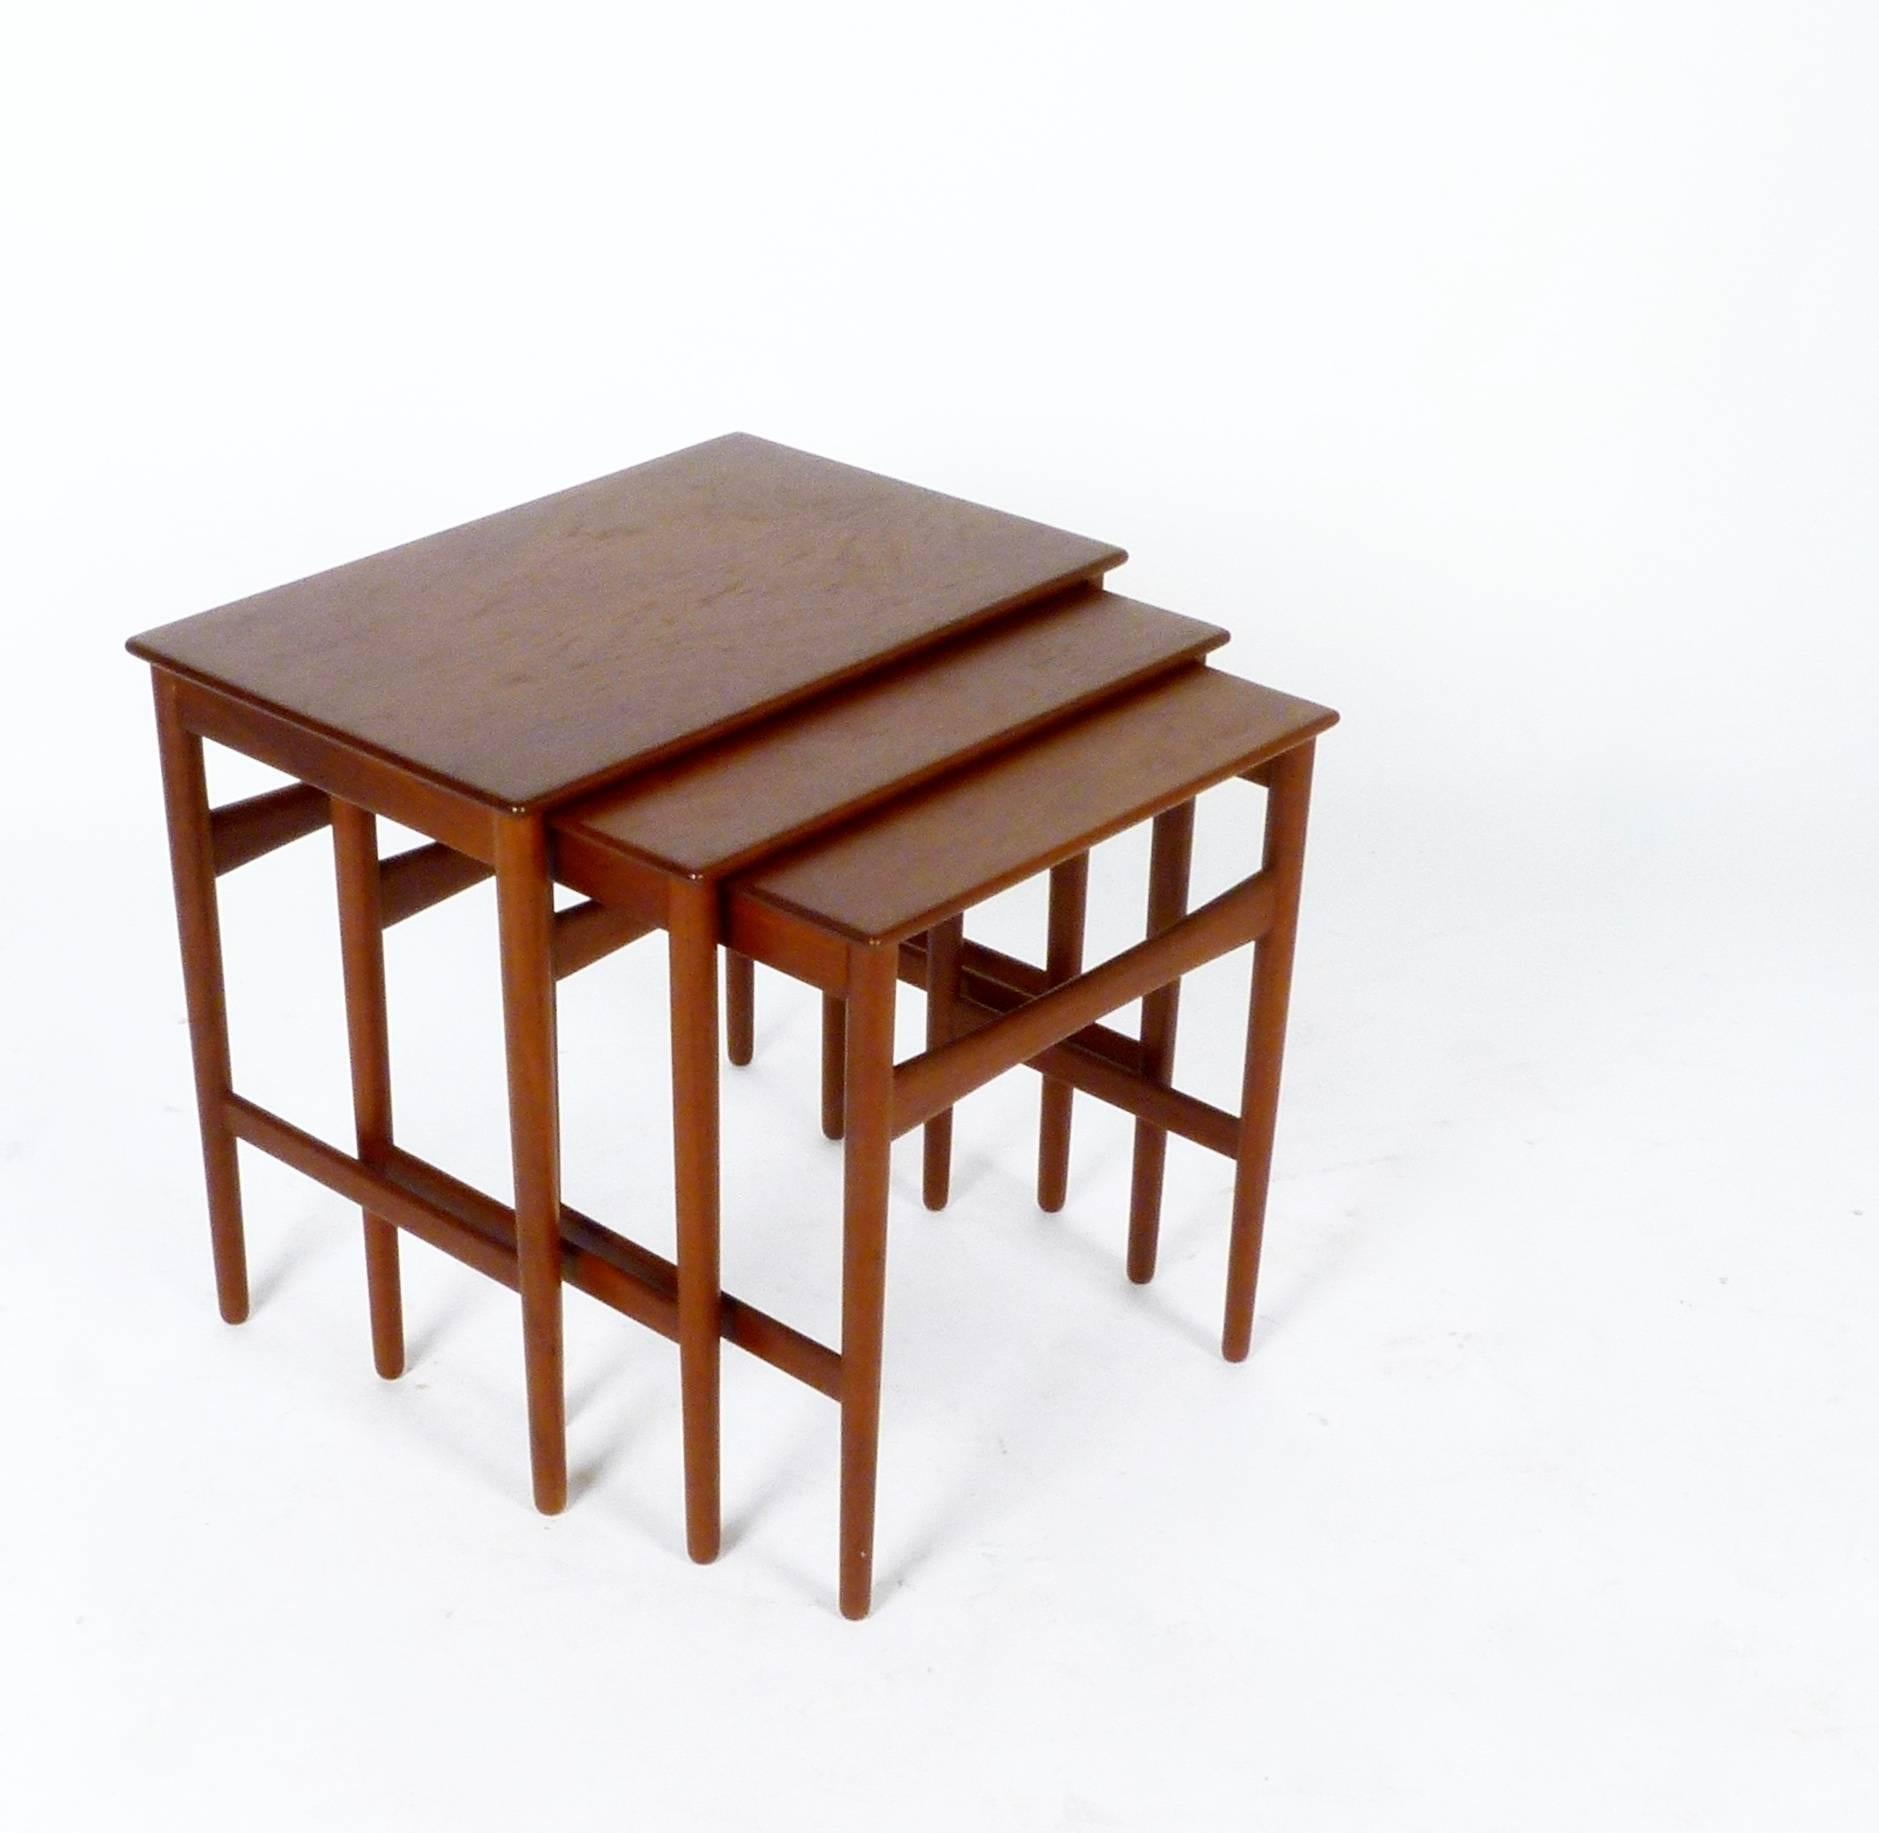 Set of three circa 1958 teak nesting tables from Denmark by Hans Wegner for Andreas Tuck.